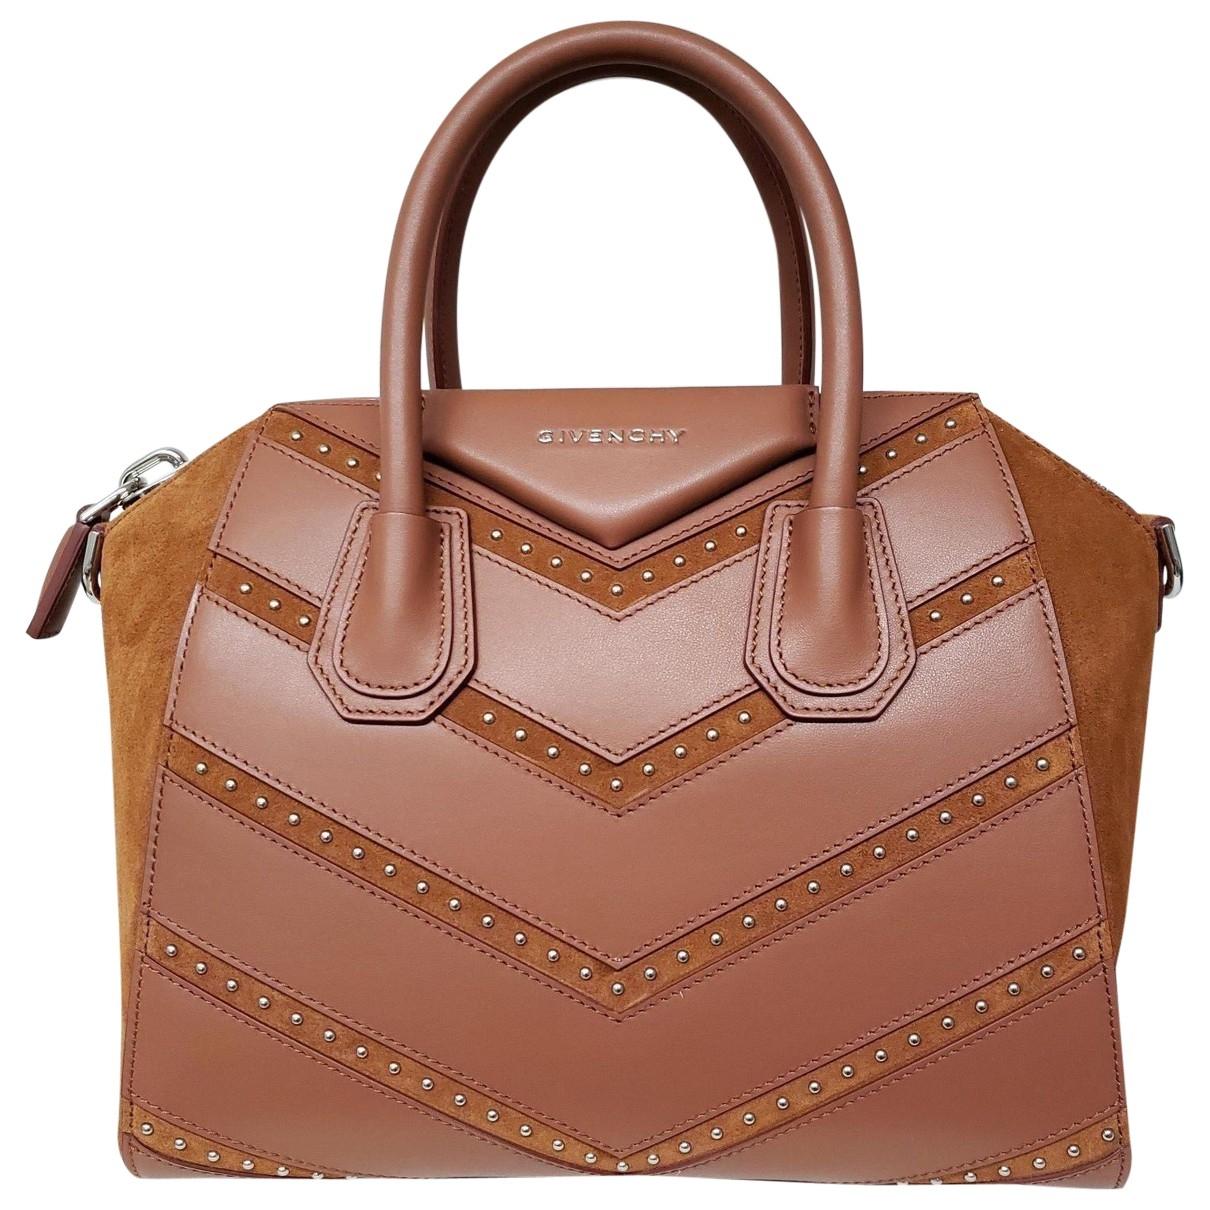 Lyst - Givenchy Antigona Brown Leather Handbag in Brown